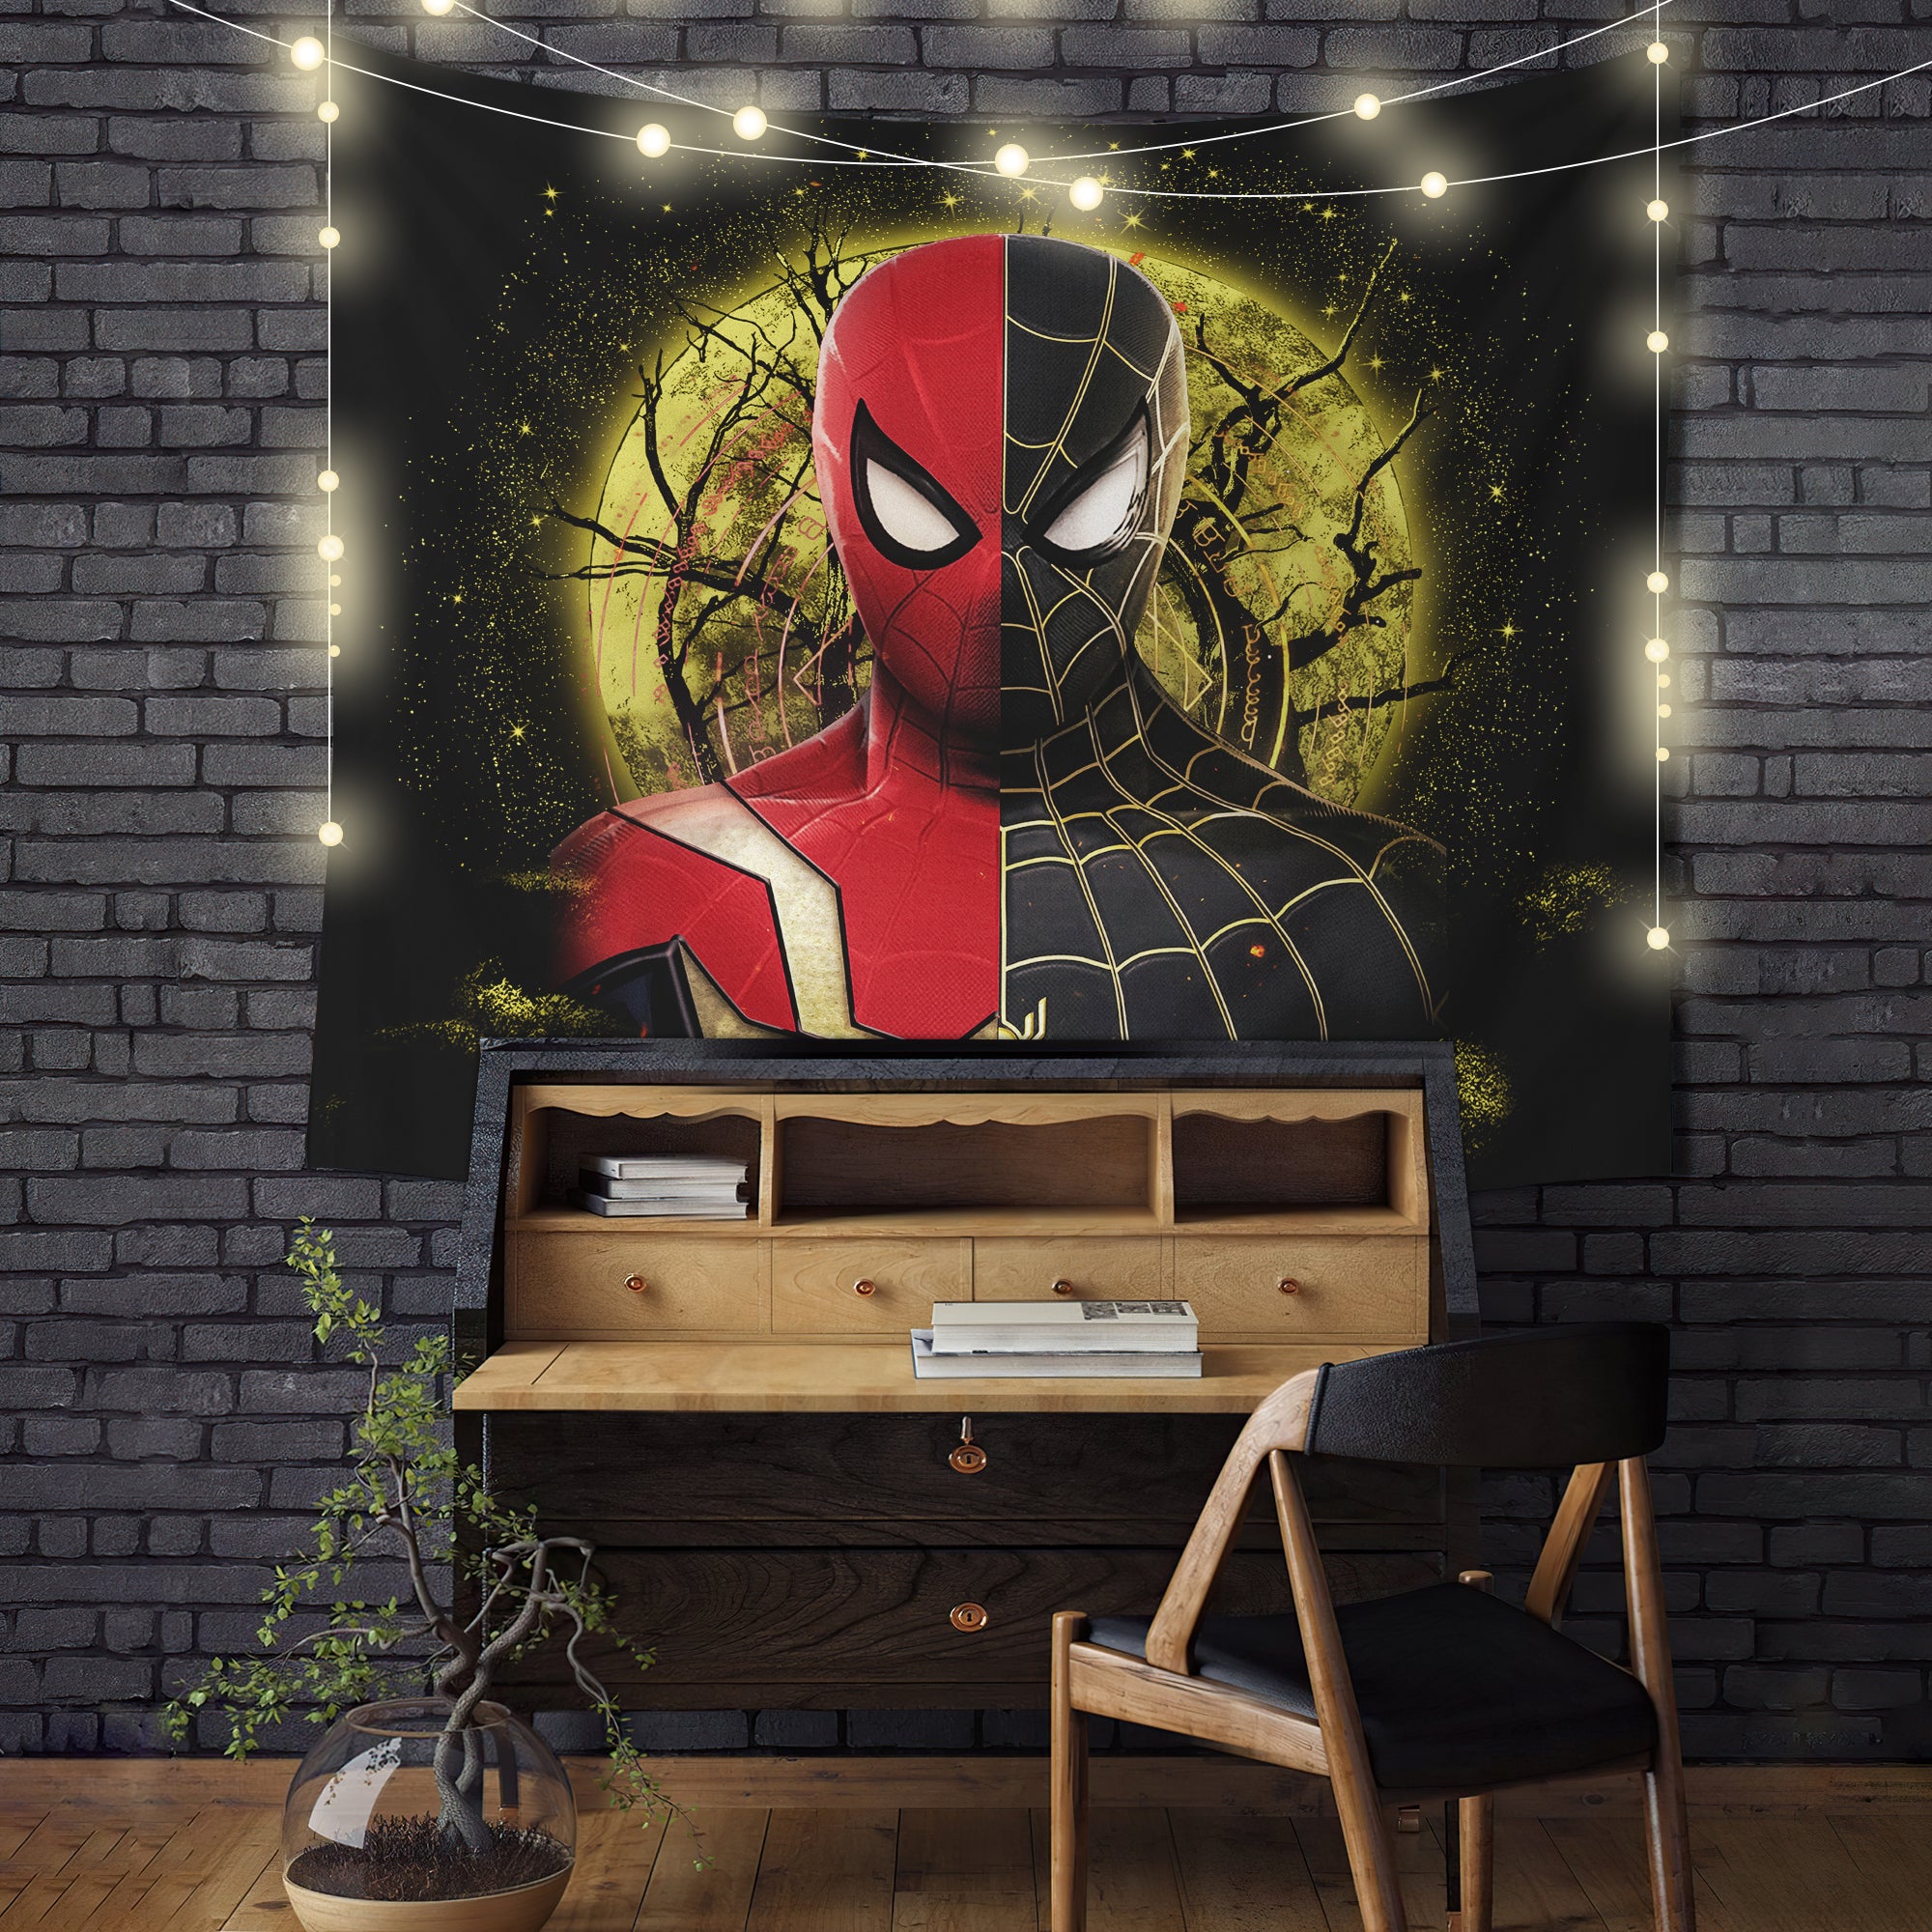 Spiderman Black Suit No Way Home Moonlight Tapestry Room Decor